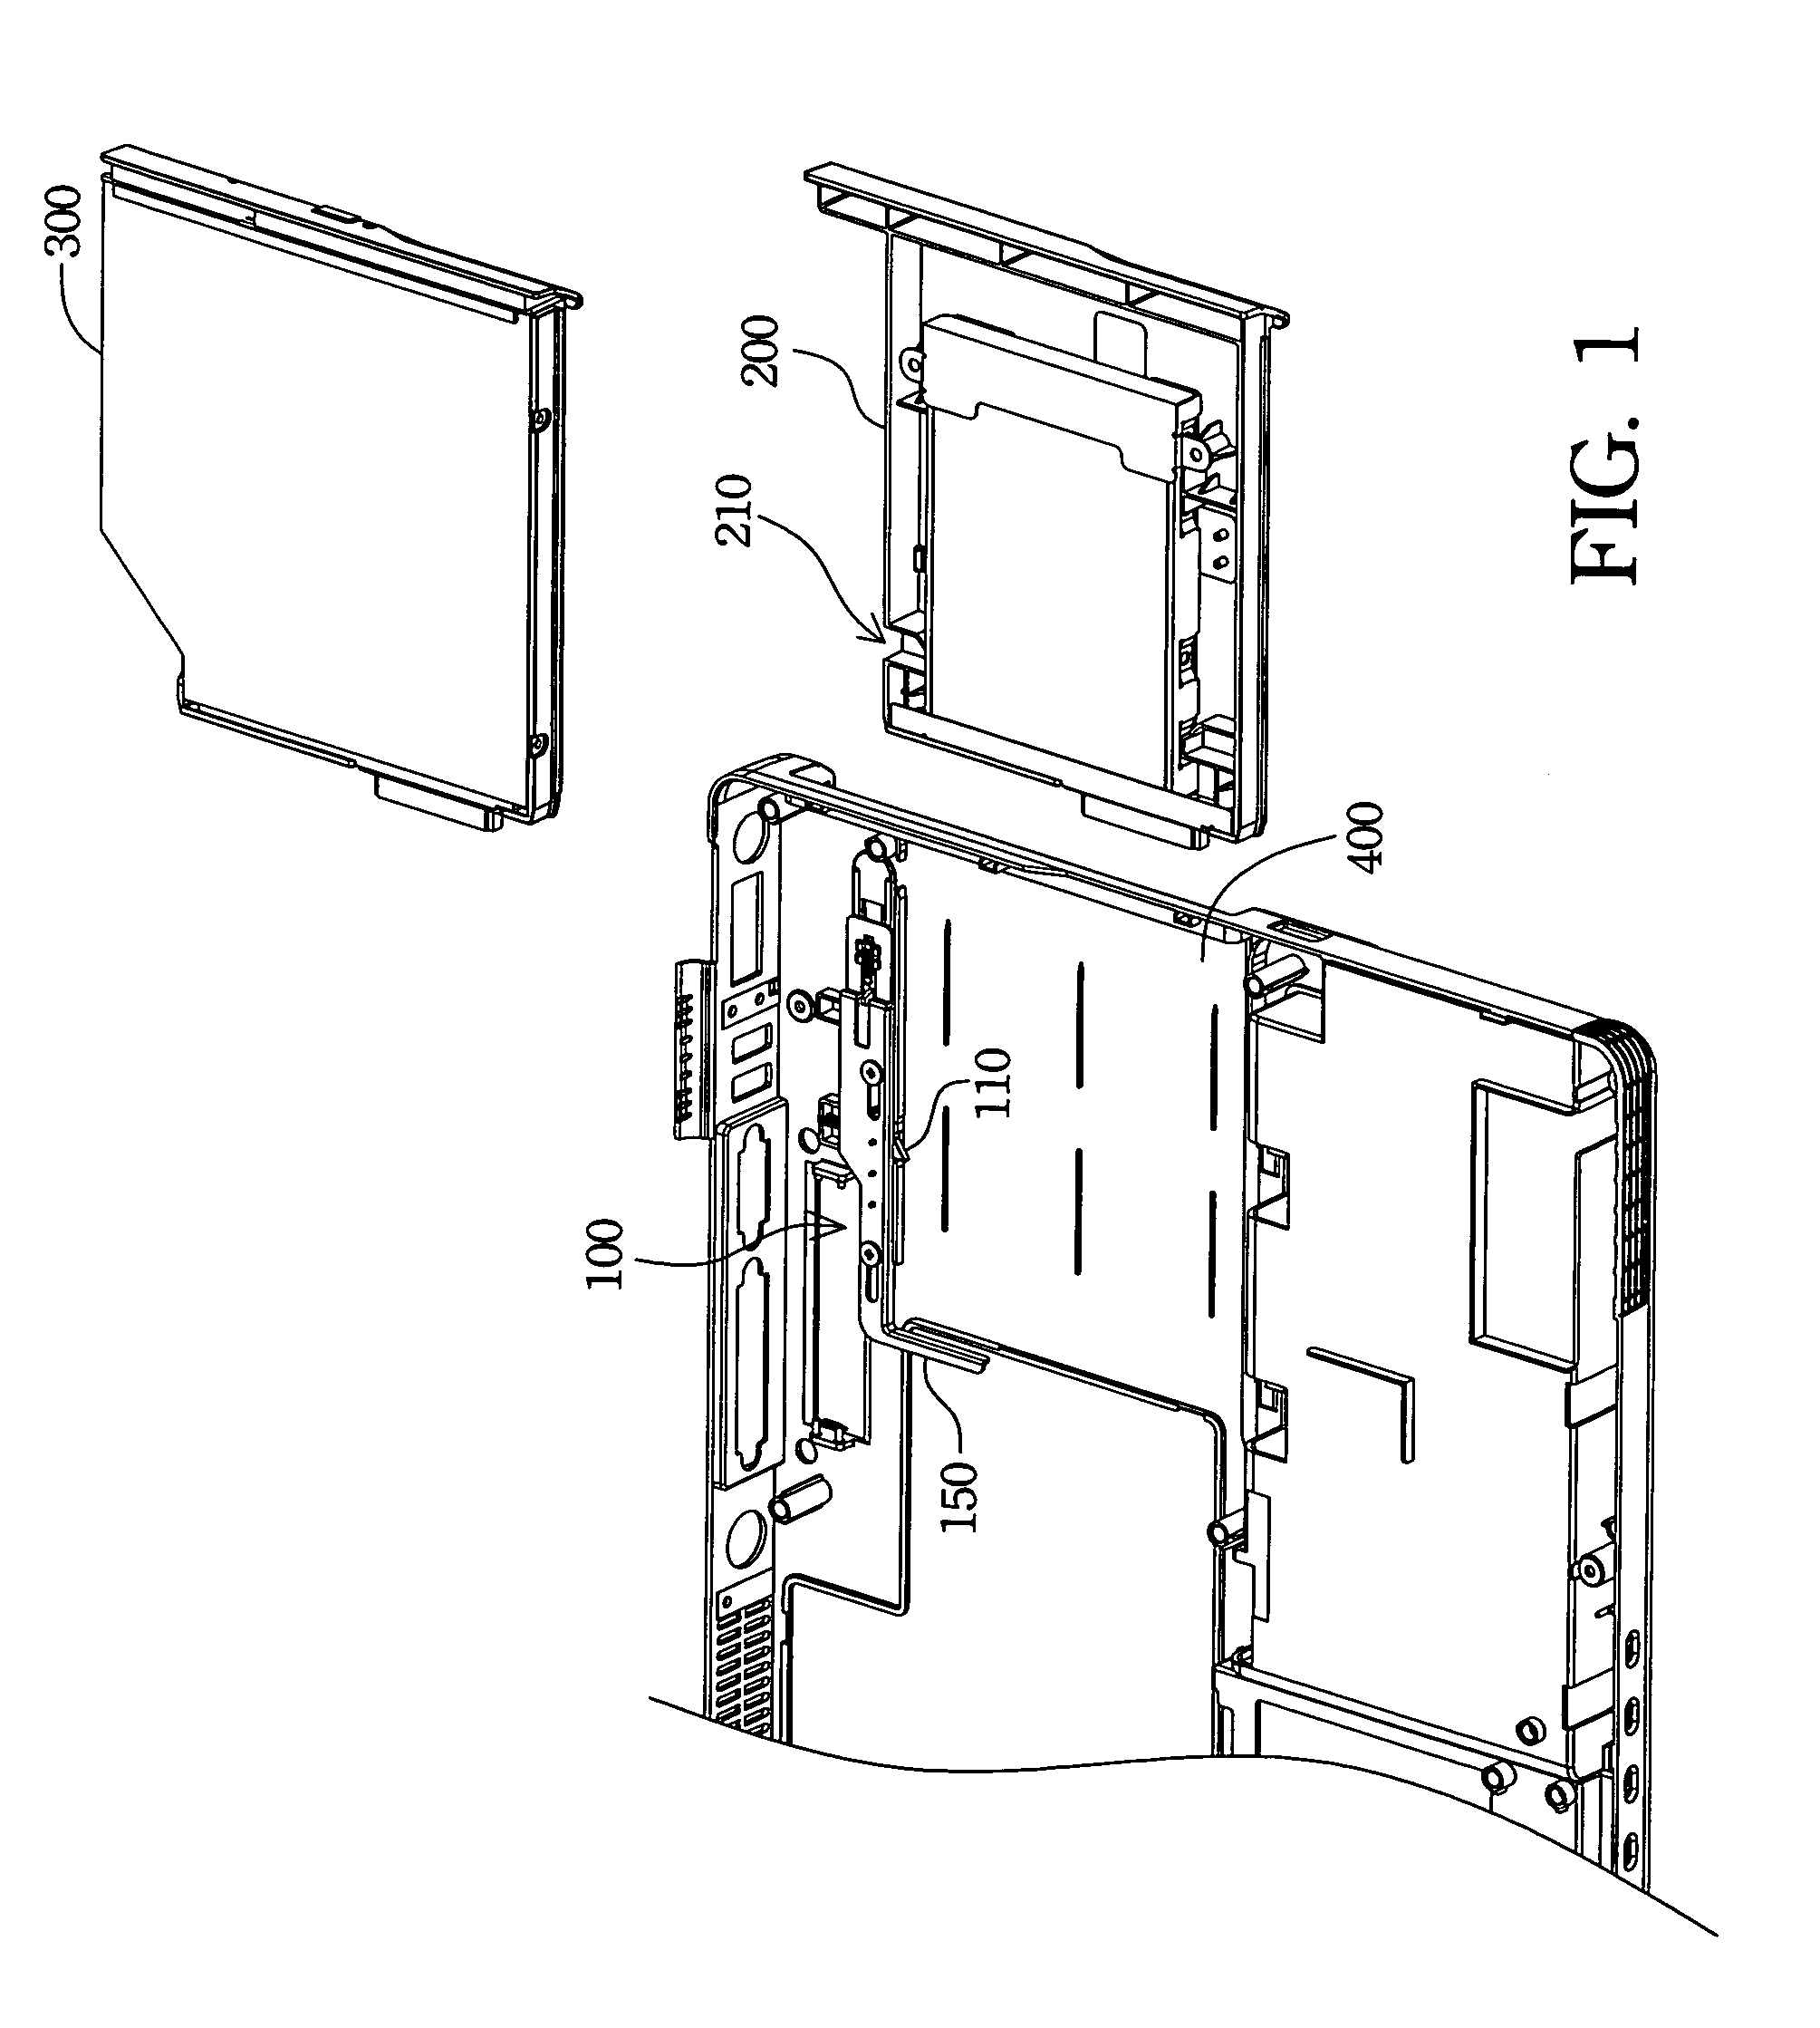 Integrated locking device